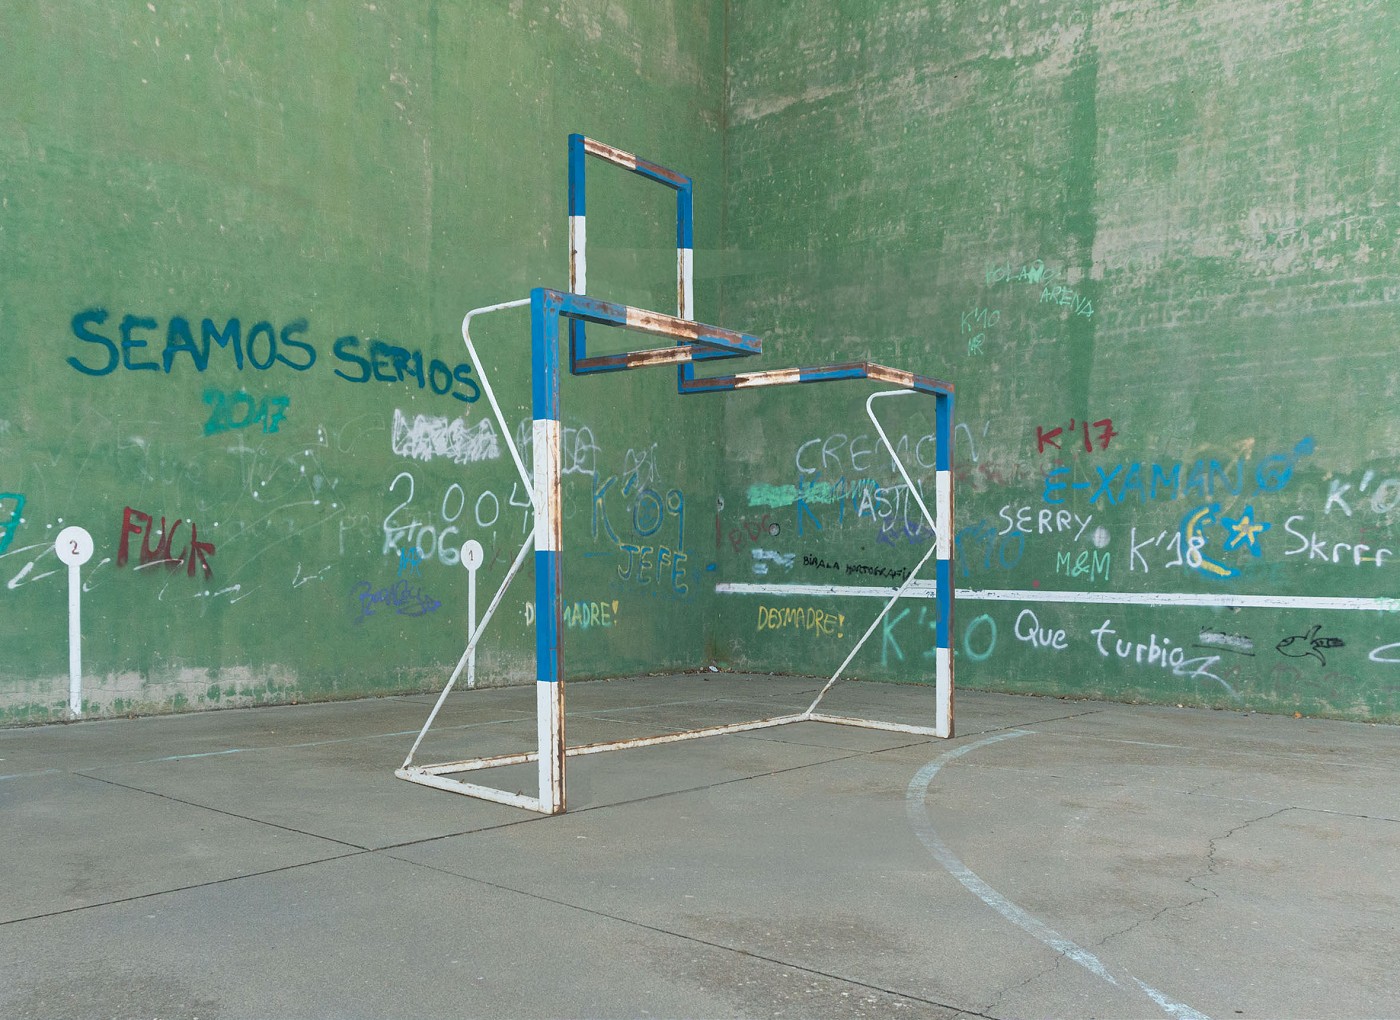 Ampparito, Goal. Source: Juxtapoz